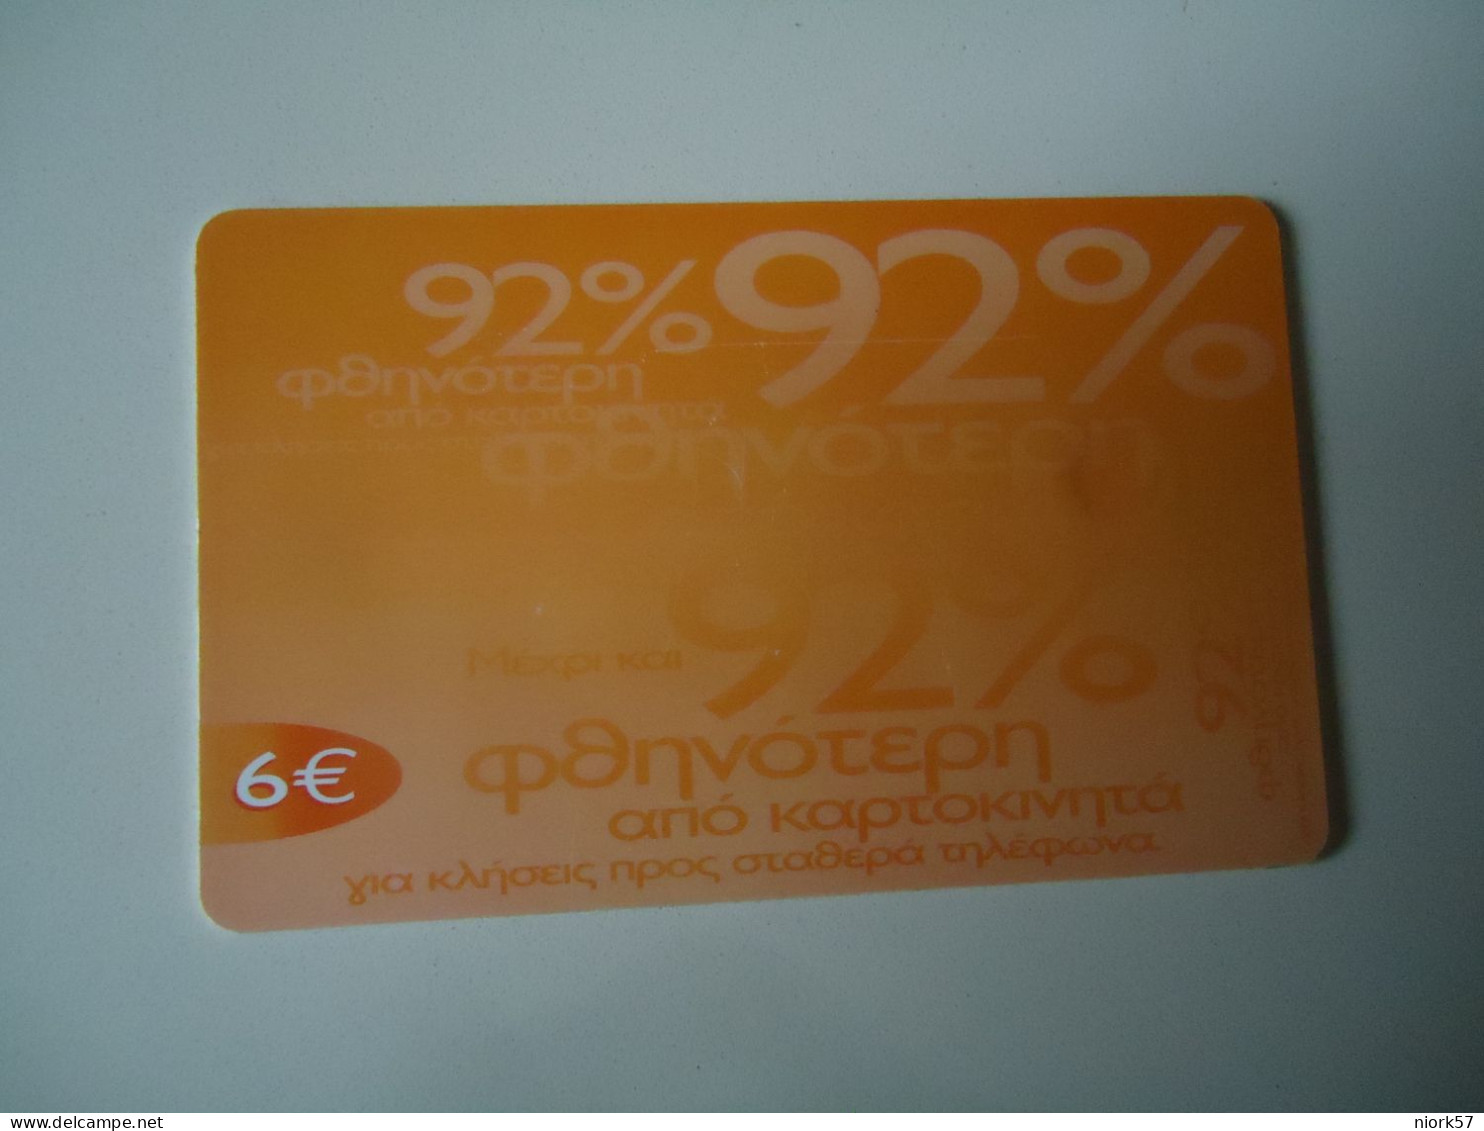 GREECE  USED CARDS  OTE 6  EYRO - Opérateurs Télécom